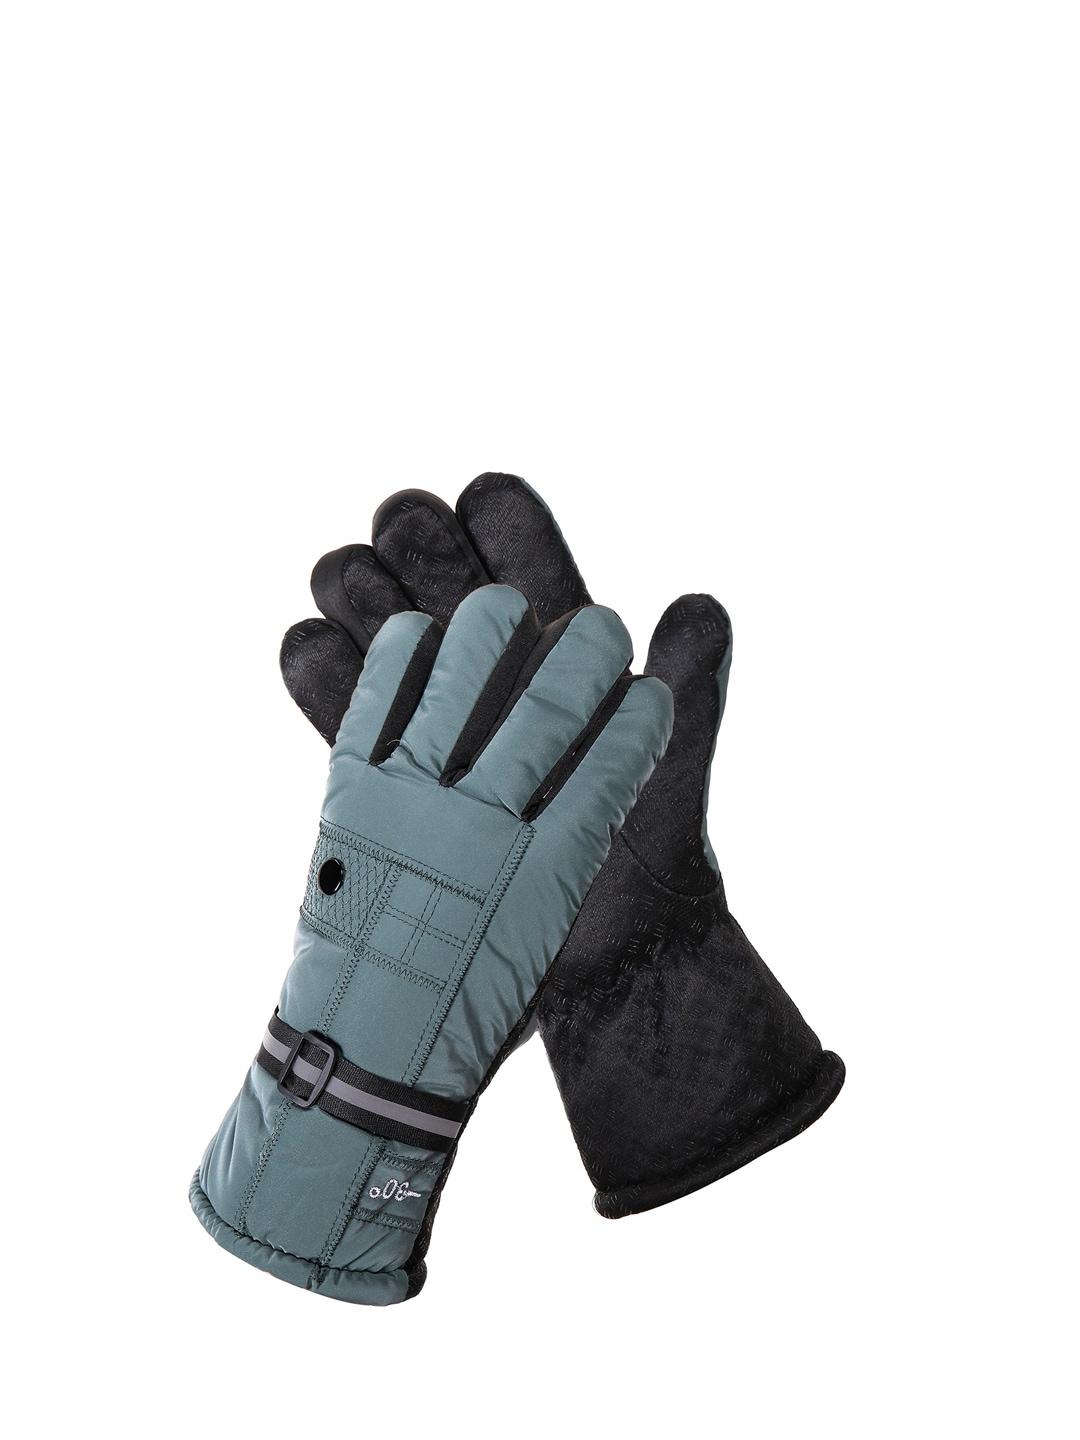 alexvyan men snow & wind proof protective riding gloves